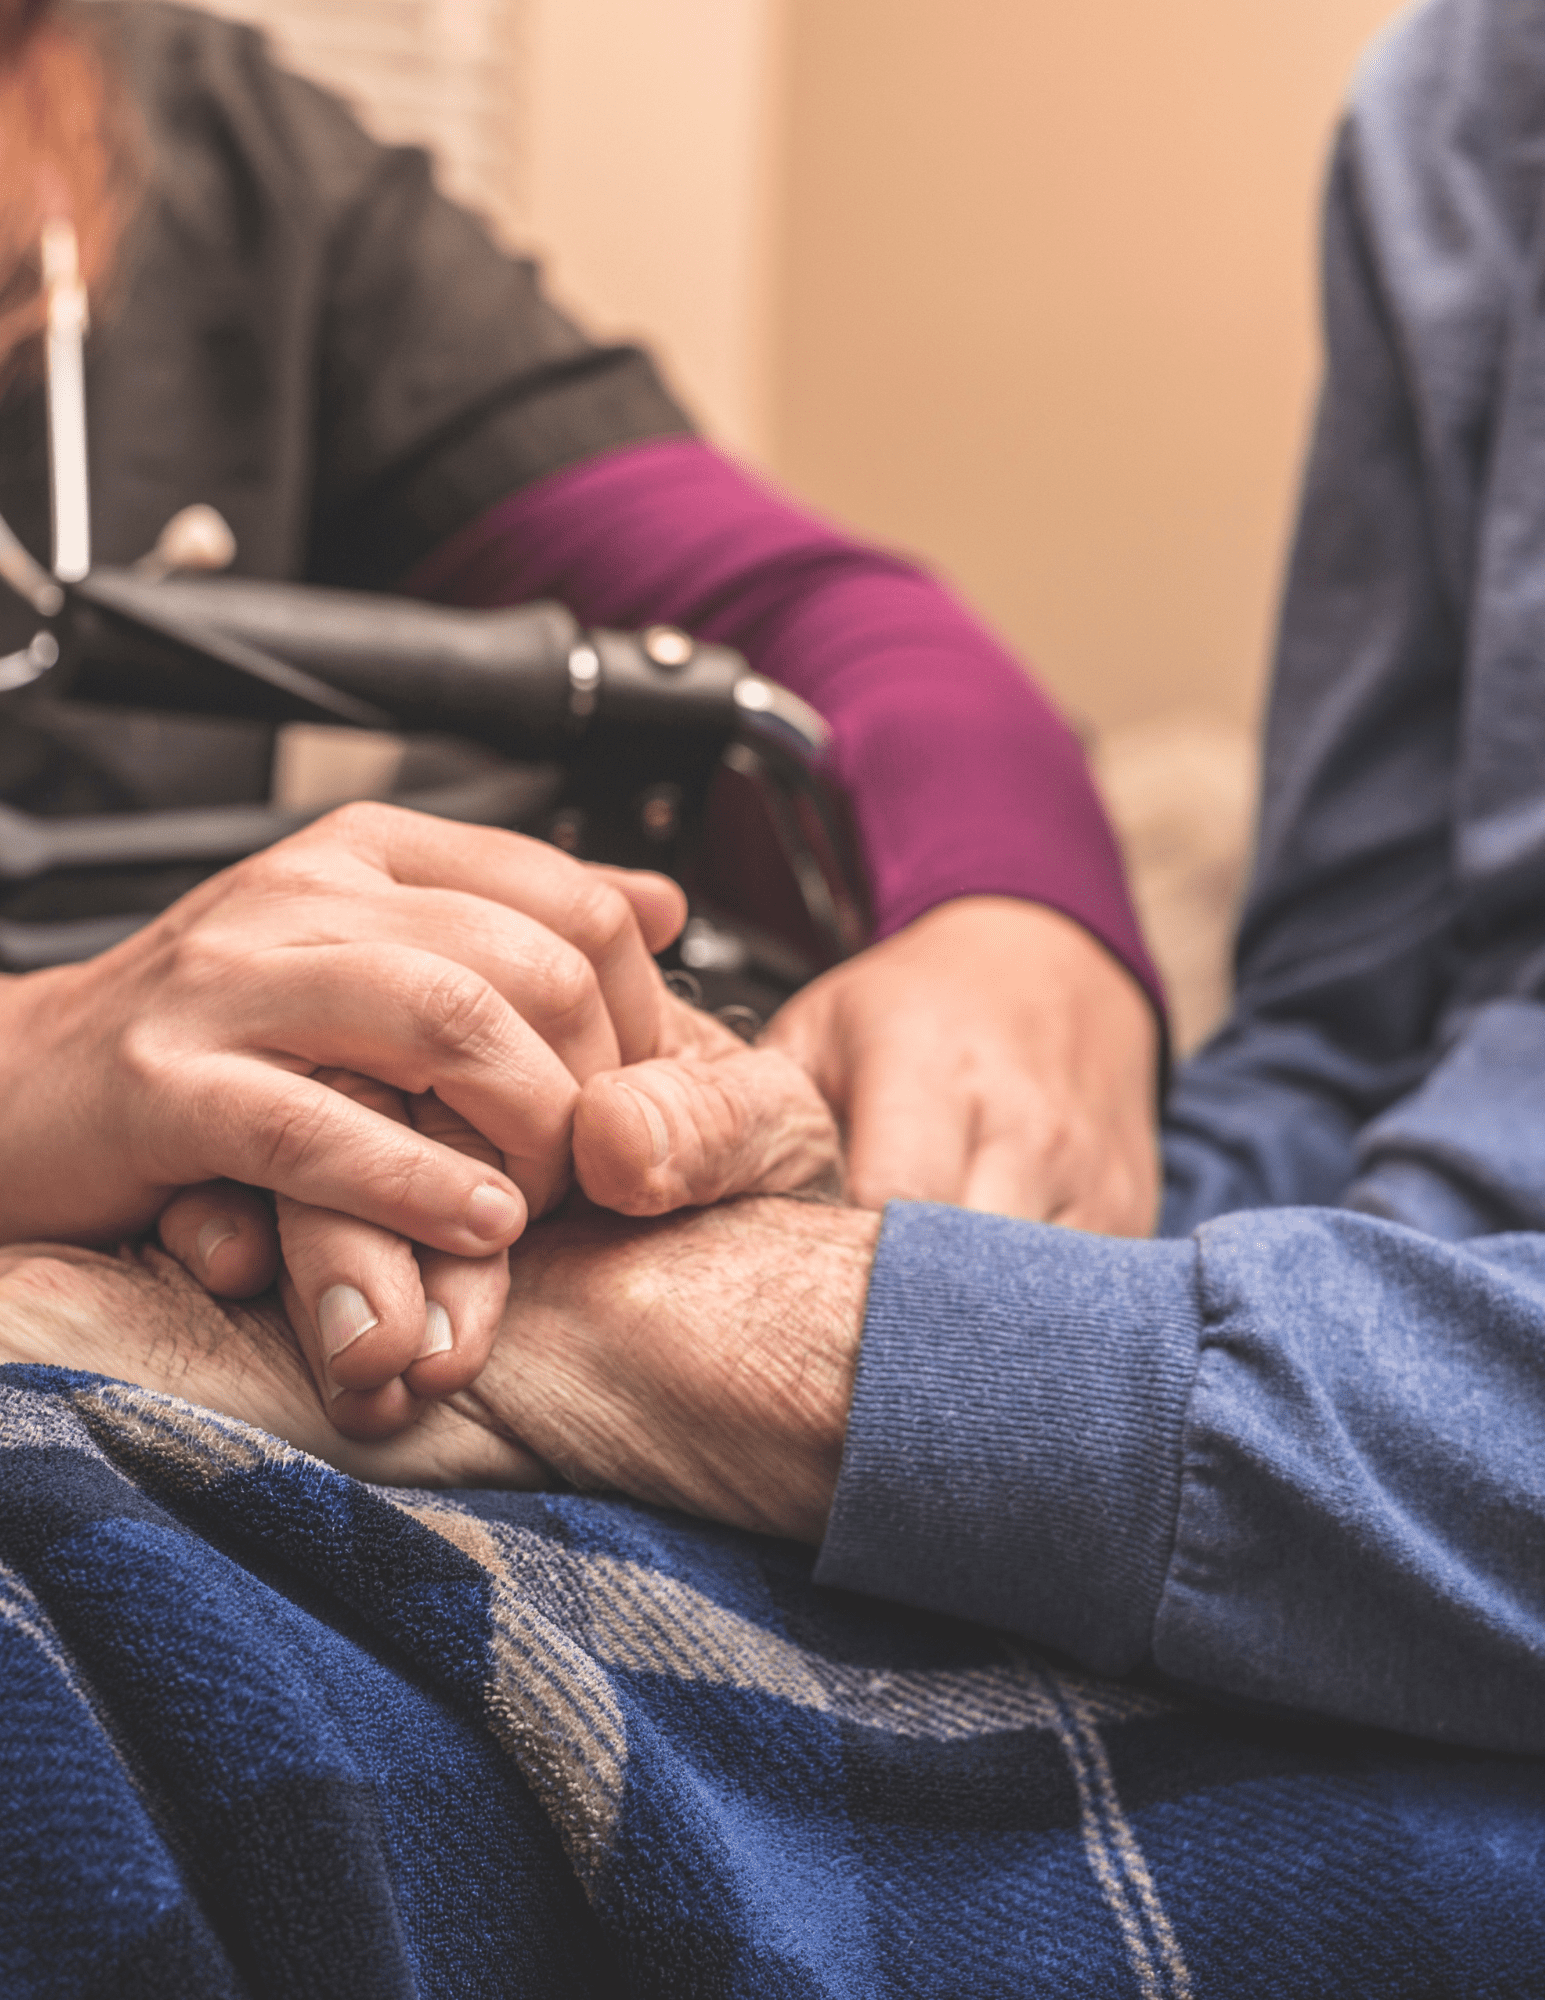 improve hospice operations